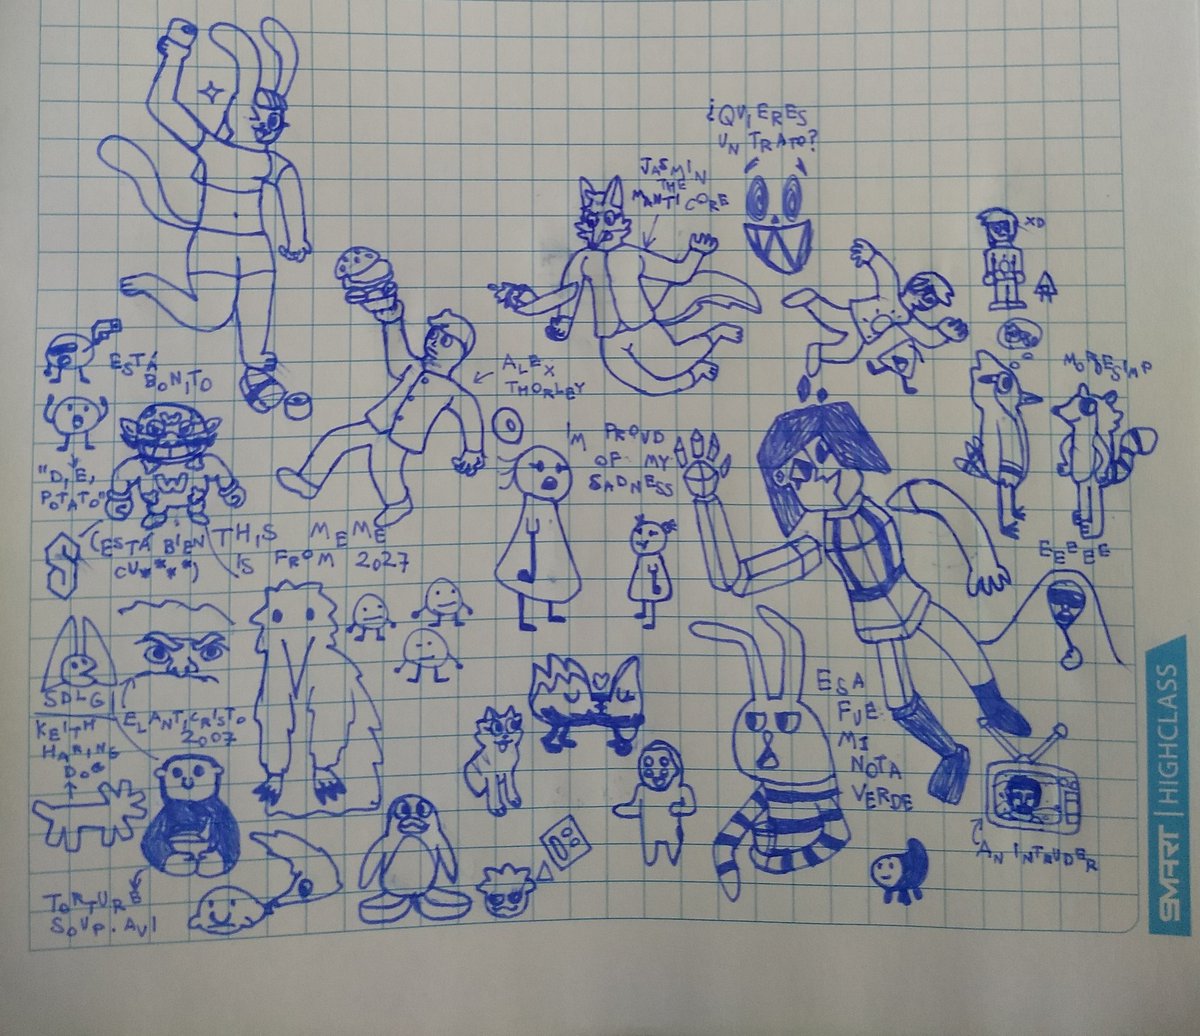 bunch of uni doodles

#art #arte #pencilsketch #sketch #doodle #doodleart #osc #scp #furry #2010snostalgia #31minutos #enajoelg #oc #donhertzfeldt #mandelacatalogue #opiumbird